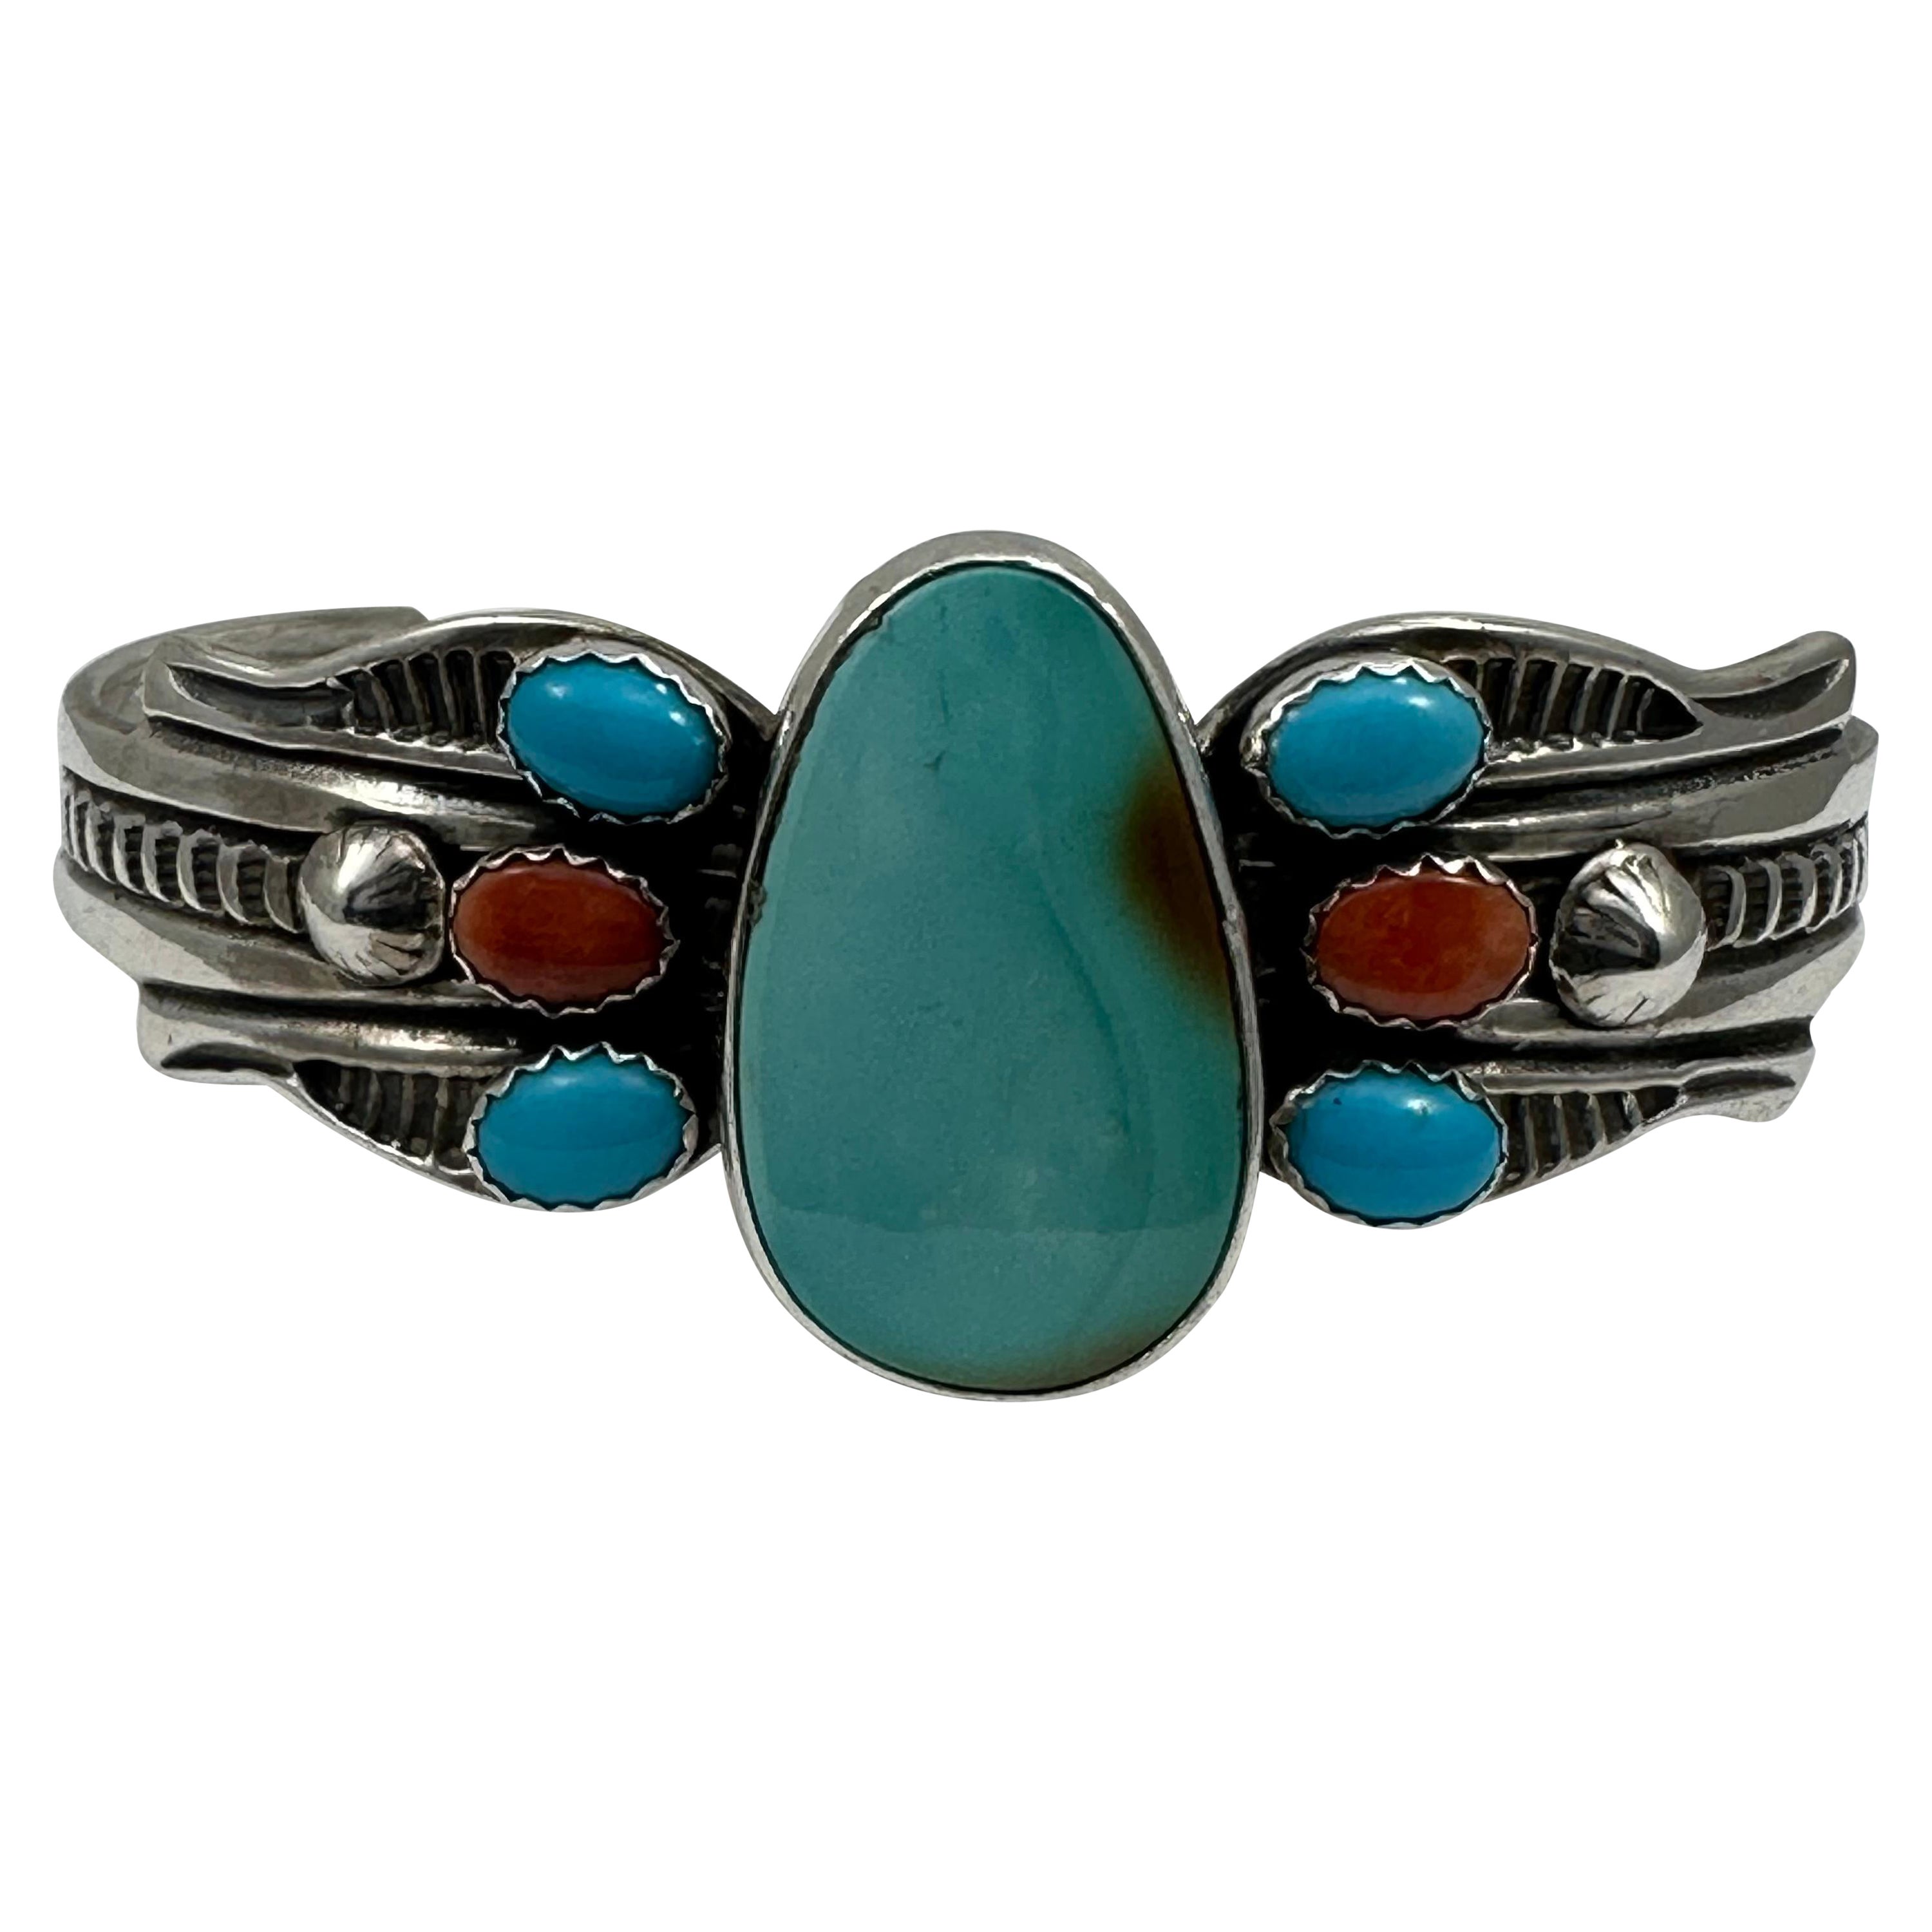 Navajo Sterling Silver .925 Turquoise & Coral Bracelet Signed Daniel Miko